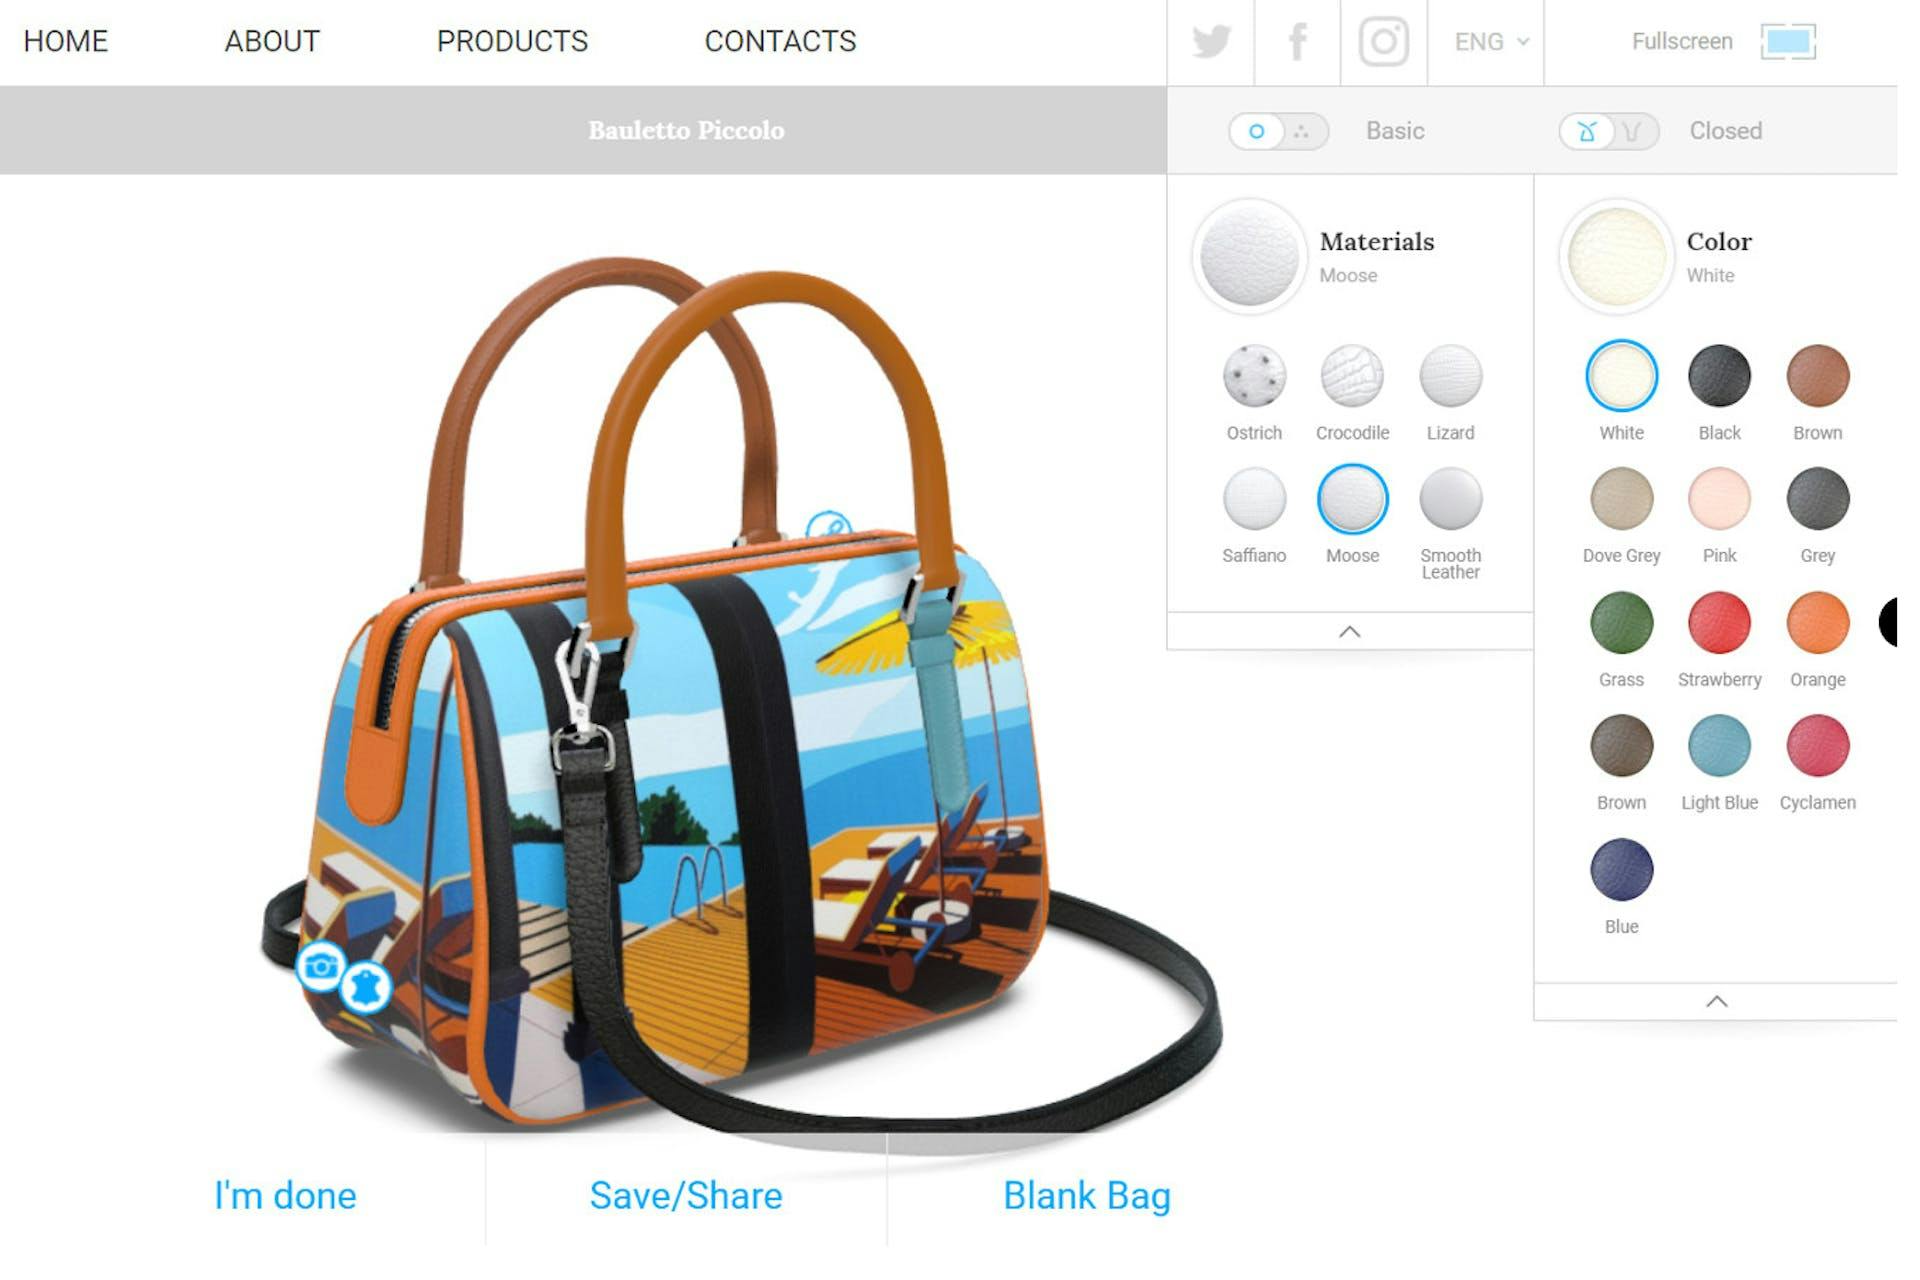 Handtaschen-Produktkonfigurator